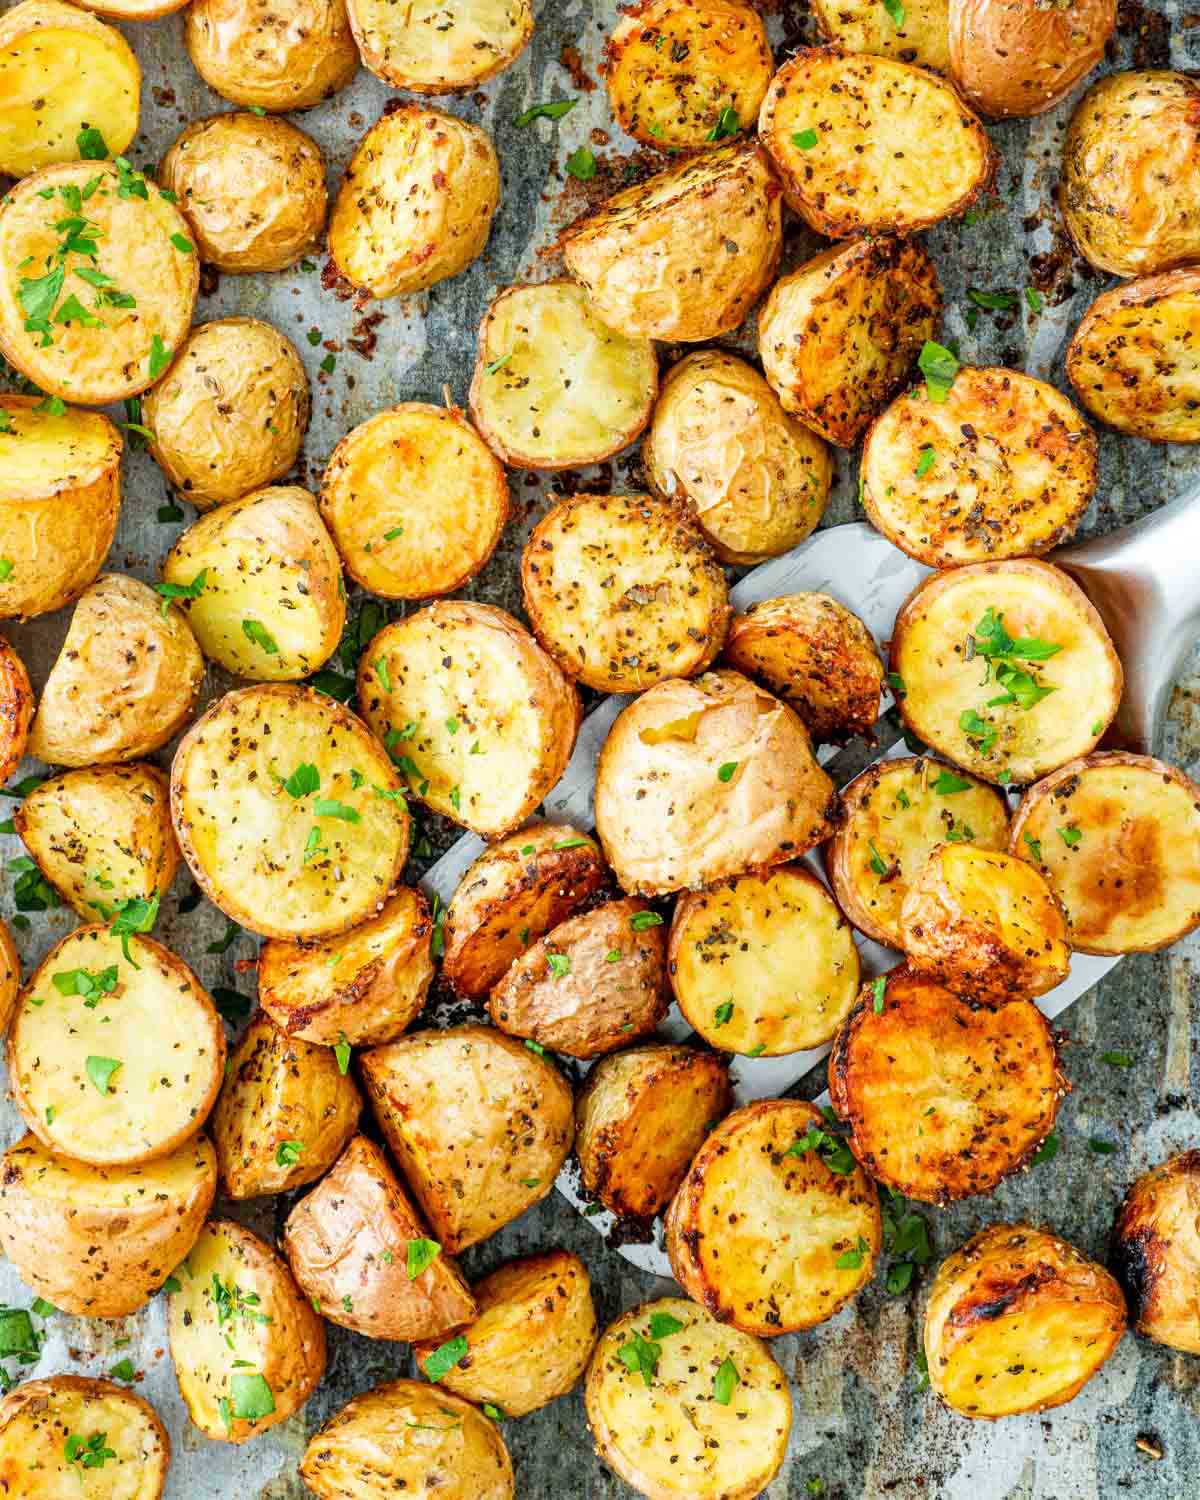 https://www.jocooks.com/wp-content/uploads/2012/02/roasted-baby-potatoes-1-6.jpg